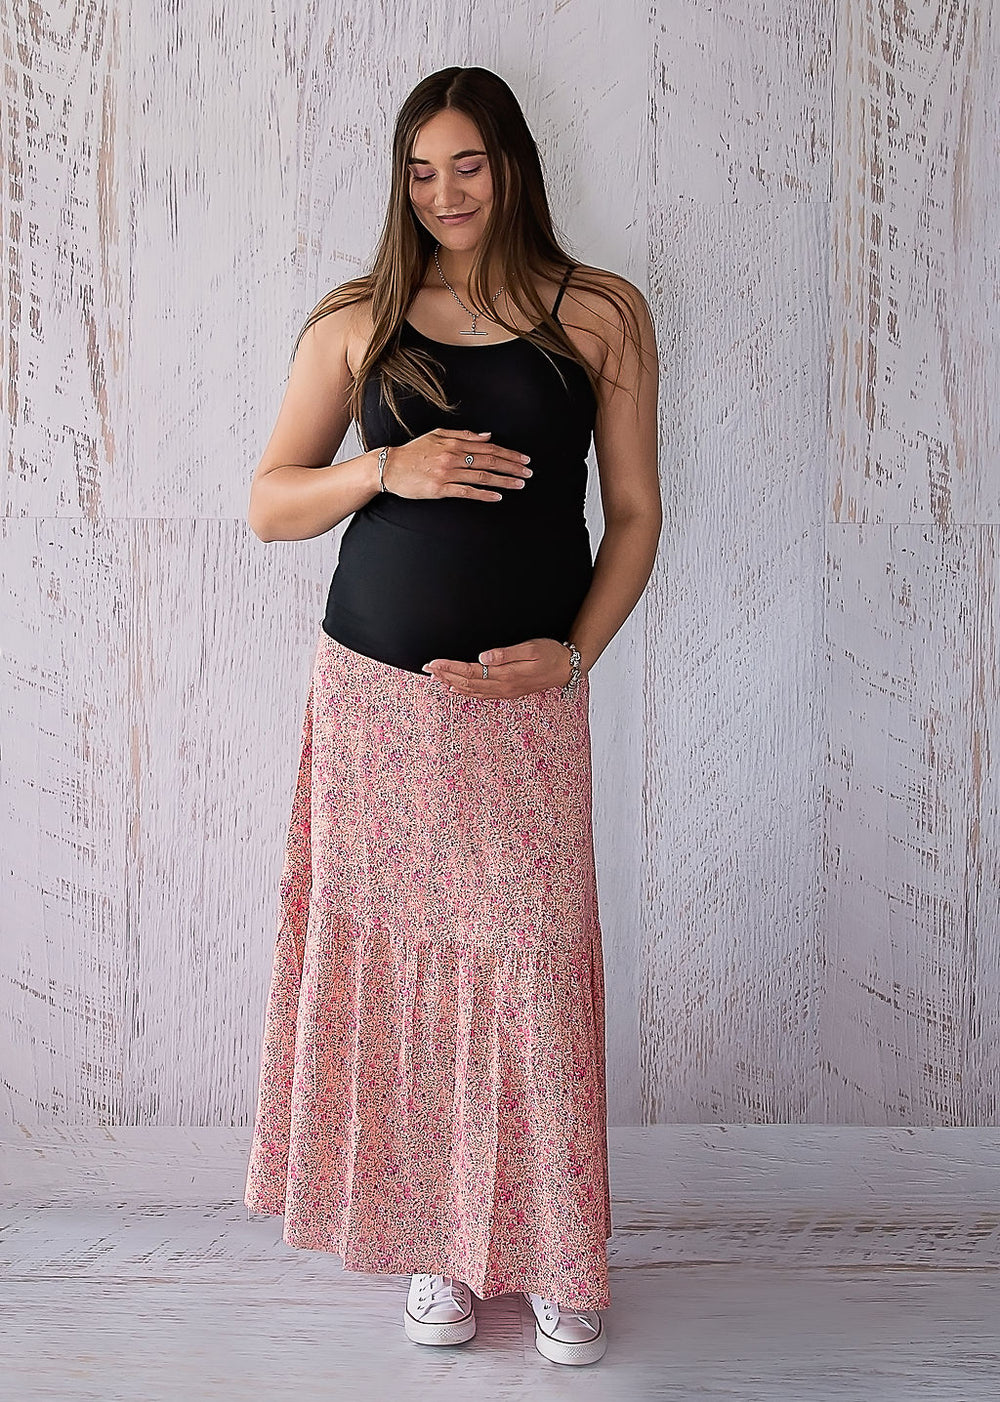 Flourish Maternity | Affordable Breastfeeding & Maternity Clothes | NZ ...